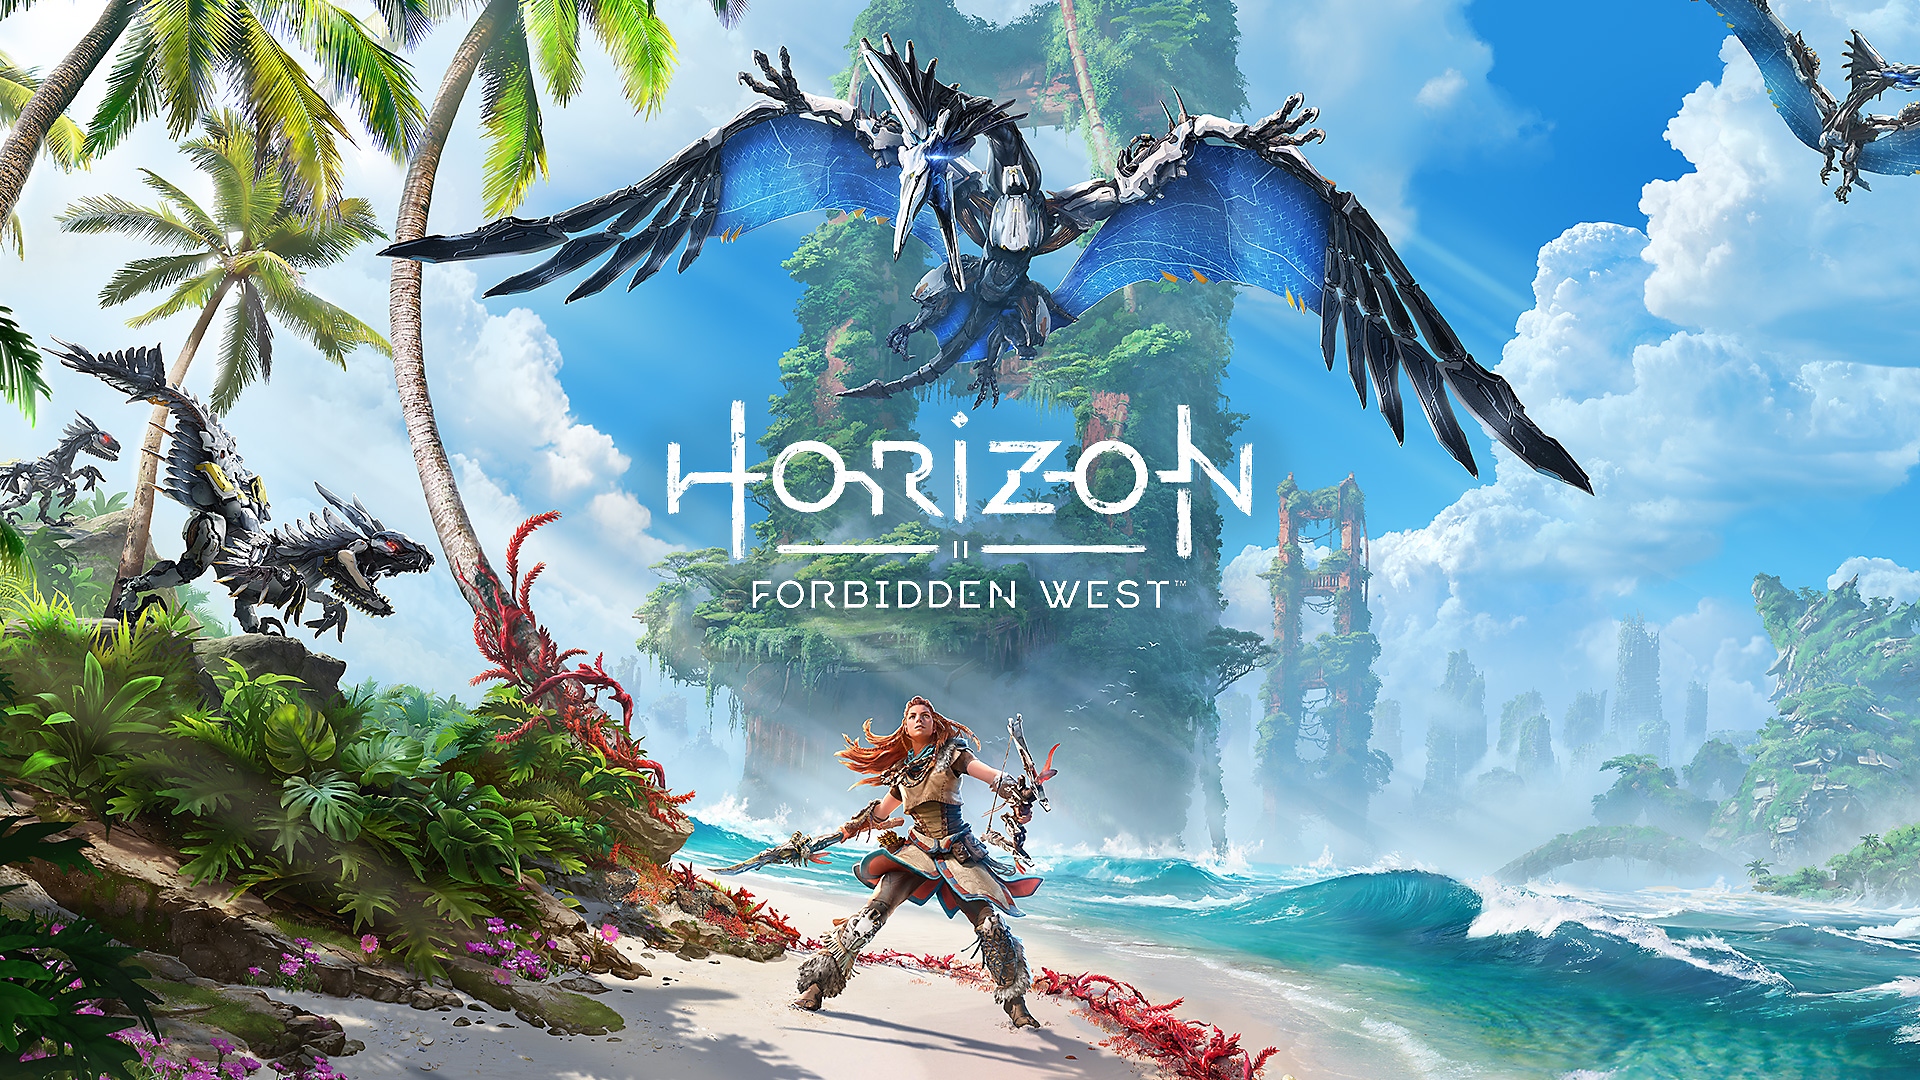 Horizon Forbidden West - Gameplay Trailer | PS4 Pro